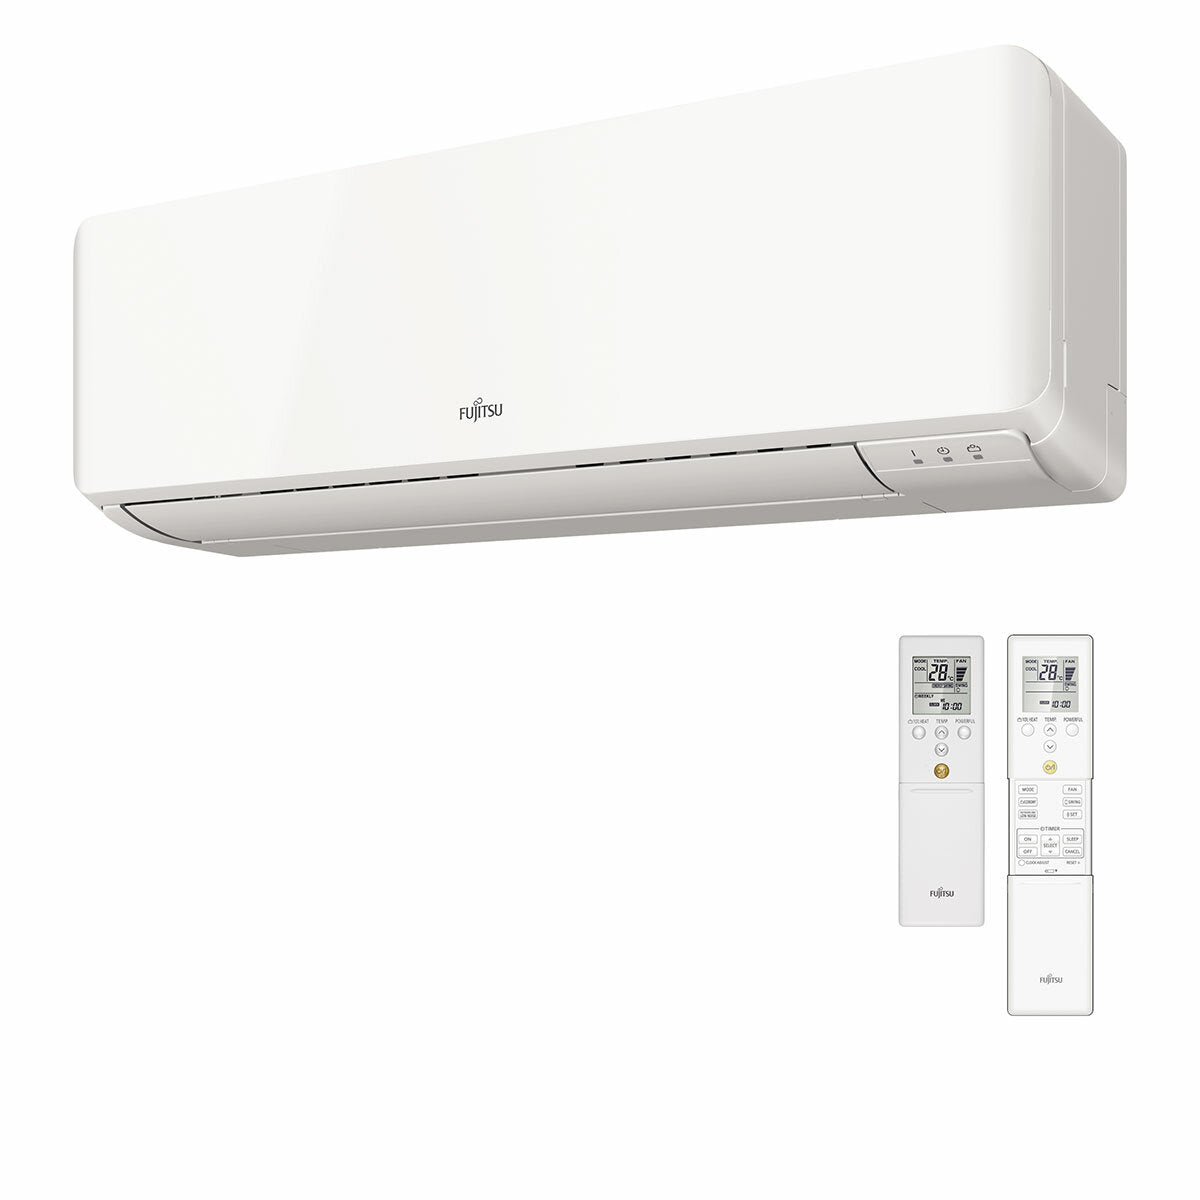 Fujitsu air conditioner KM WiFi Series dual split 7000+7000 BTU inverter A+++ external unit 4 kW